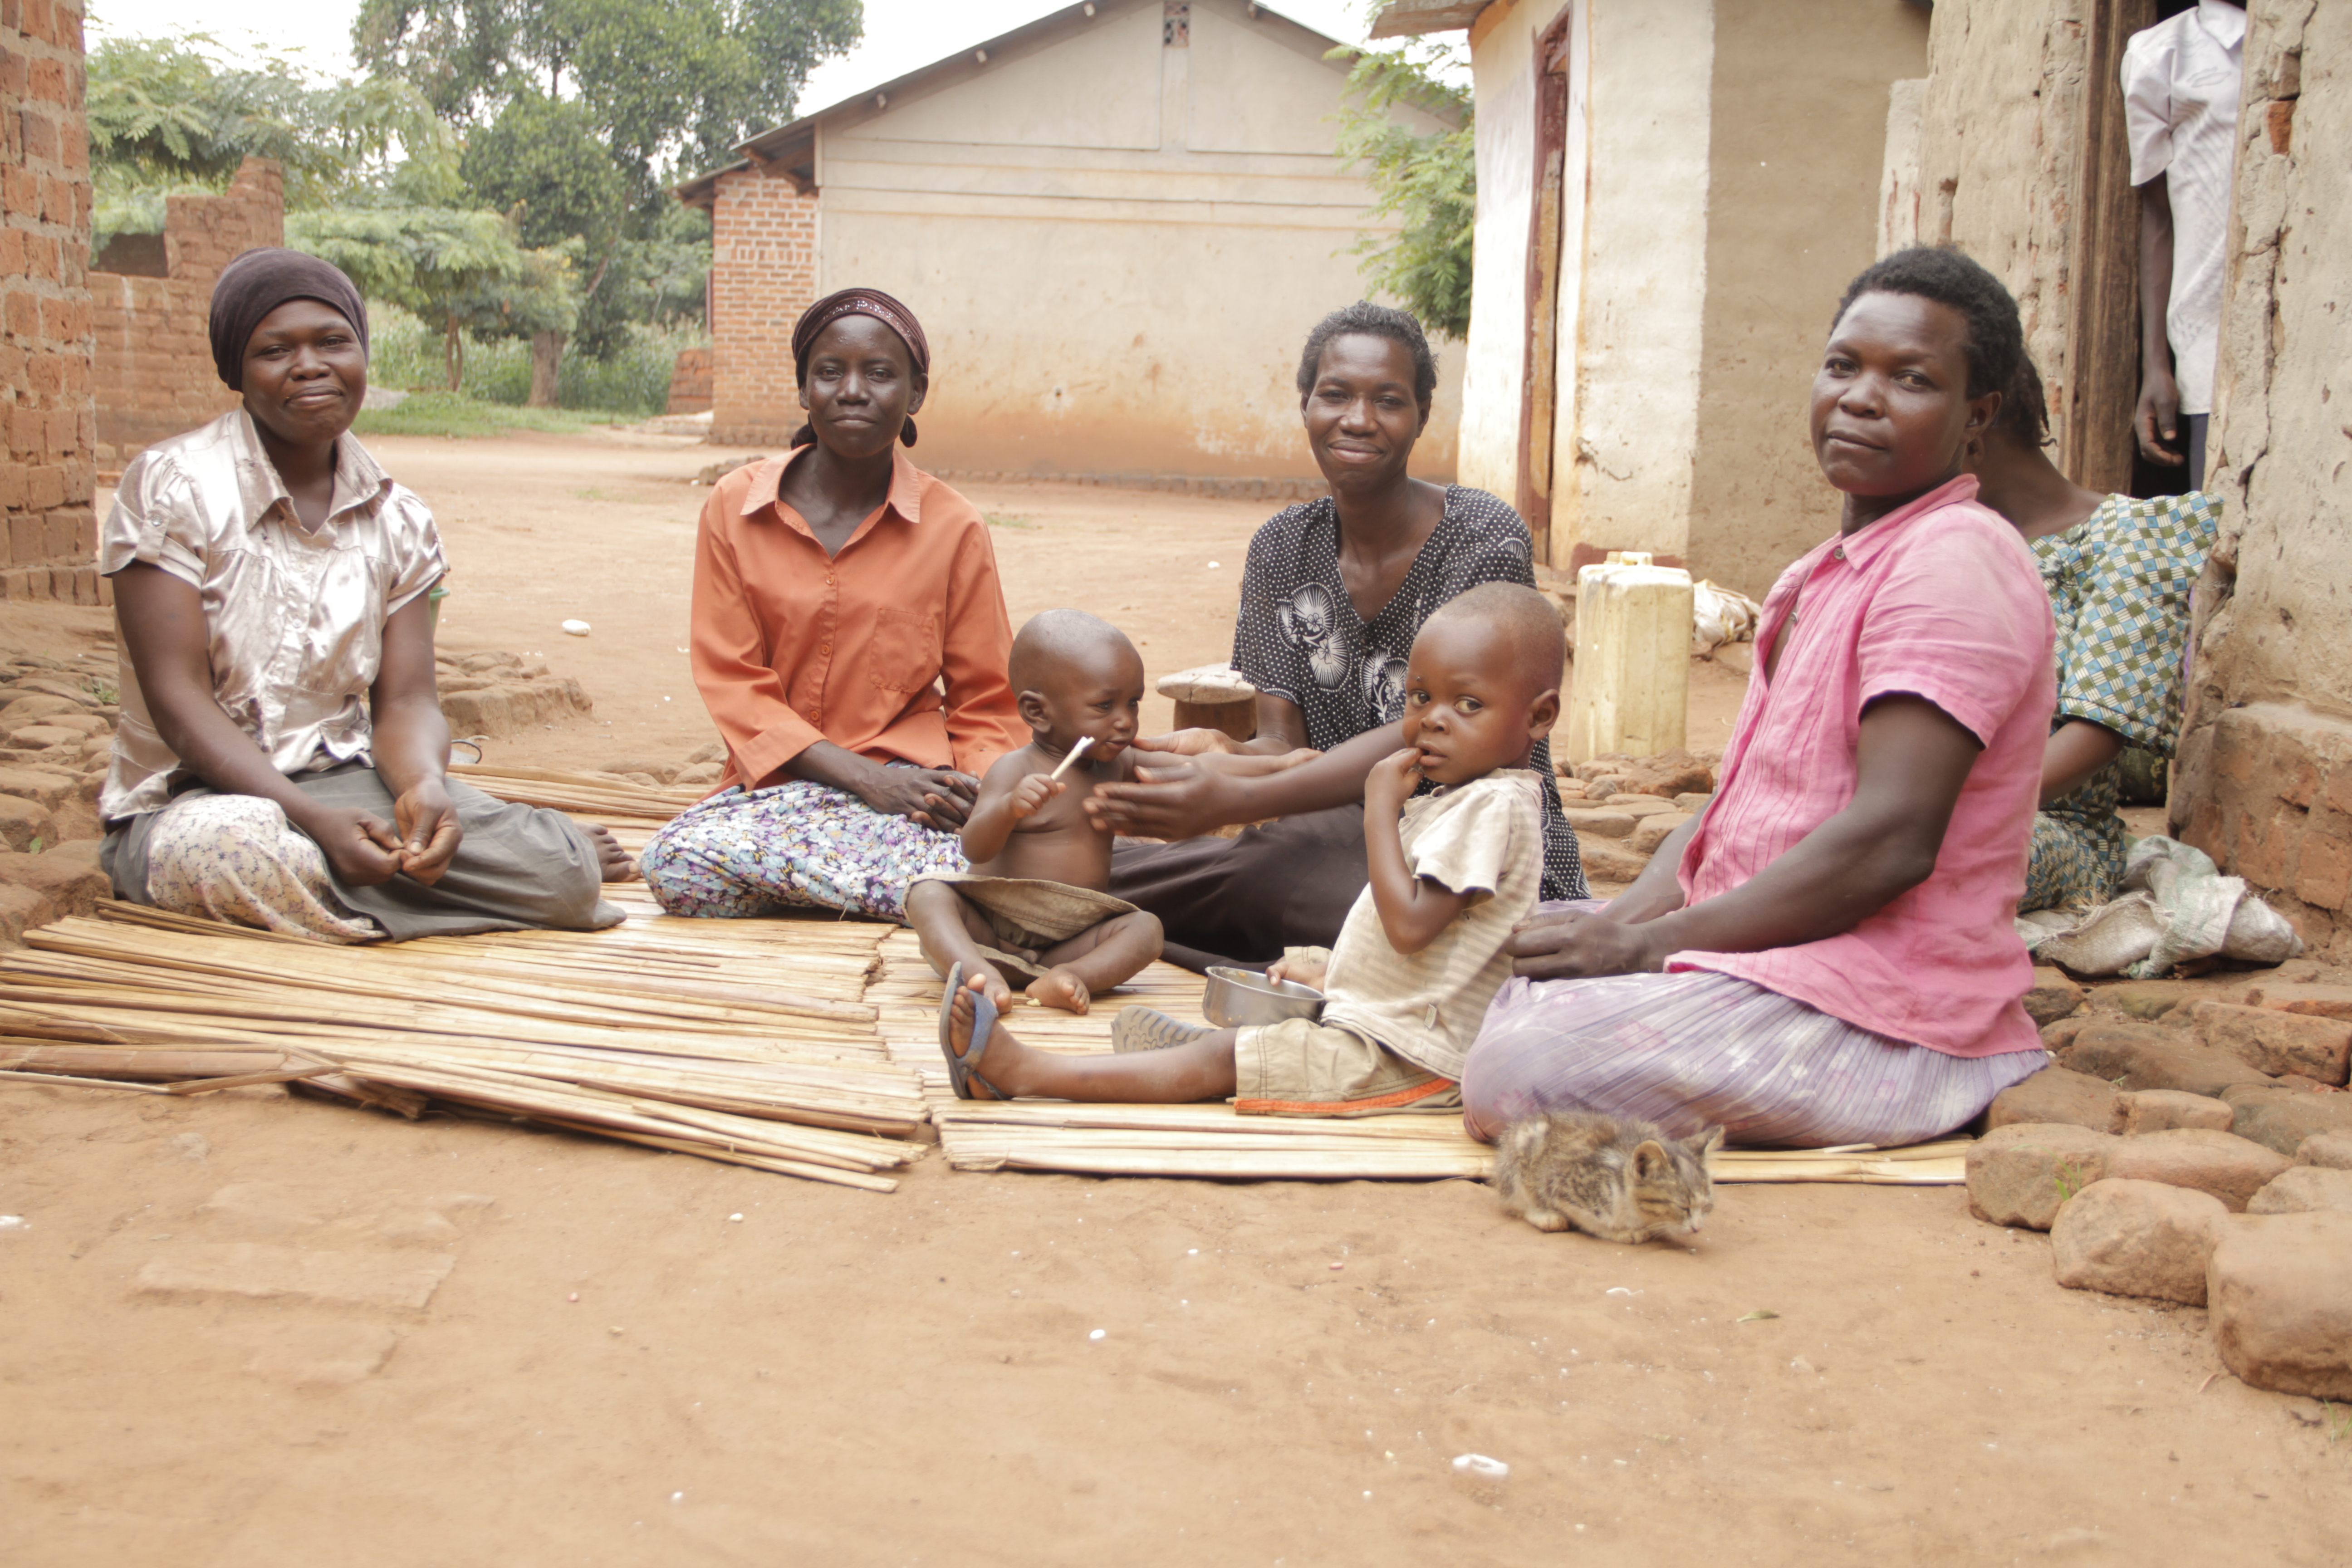 Using evidence to prevent gender-based violence and HIV in Uganda